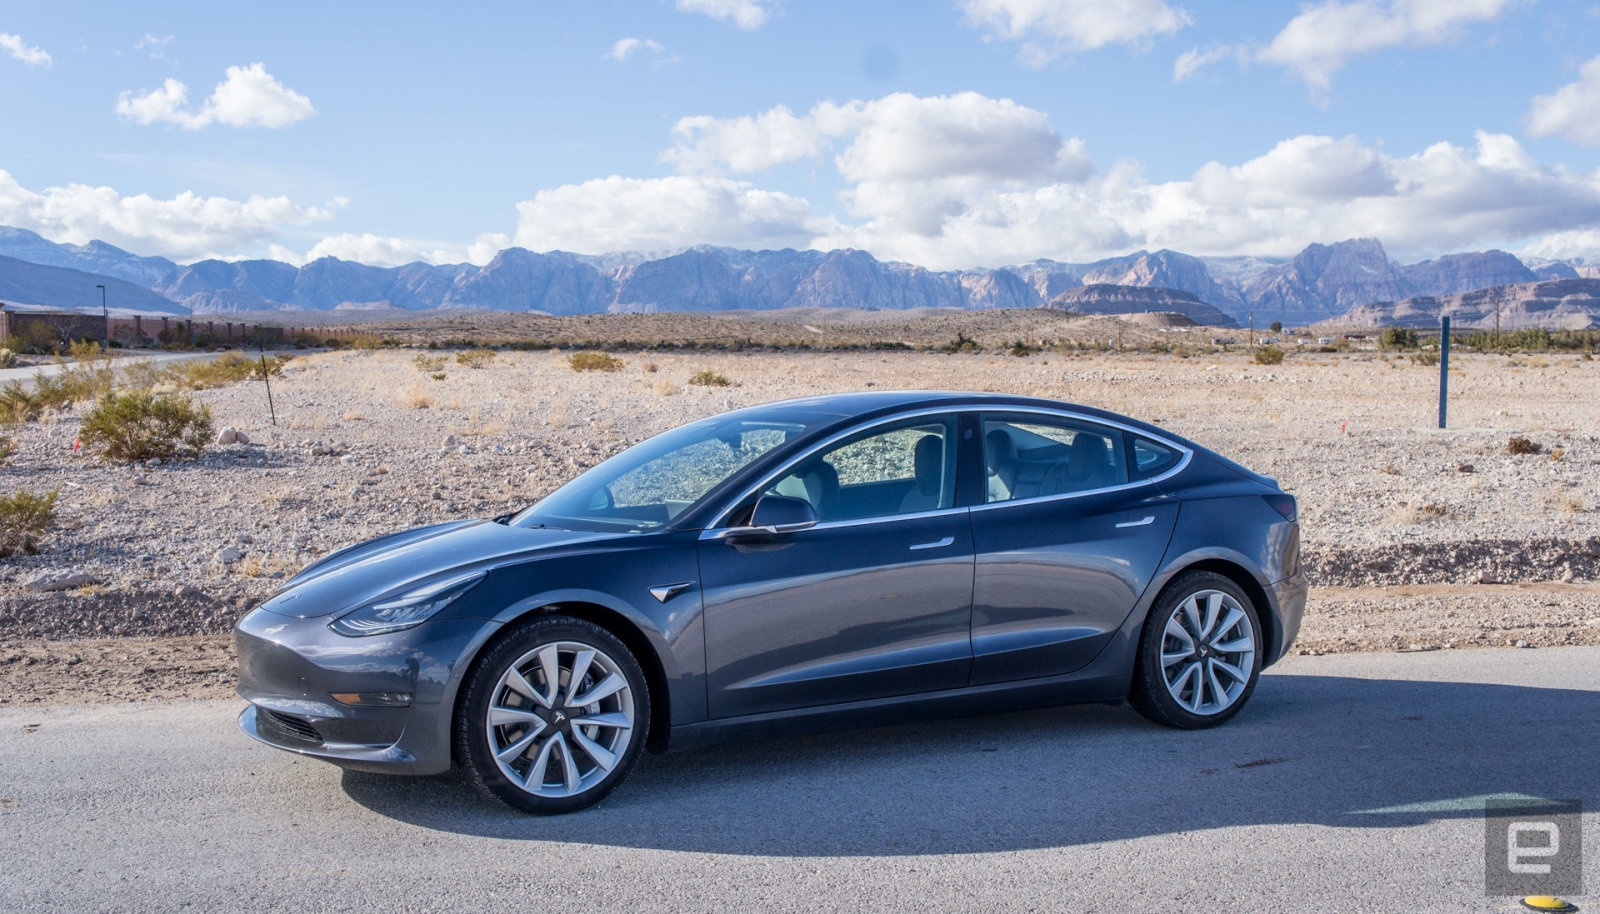 Tesla's Autopilot makes room for cars entering your lane | DeviceDaily.com